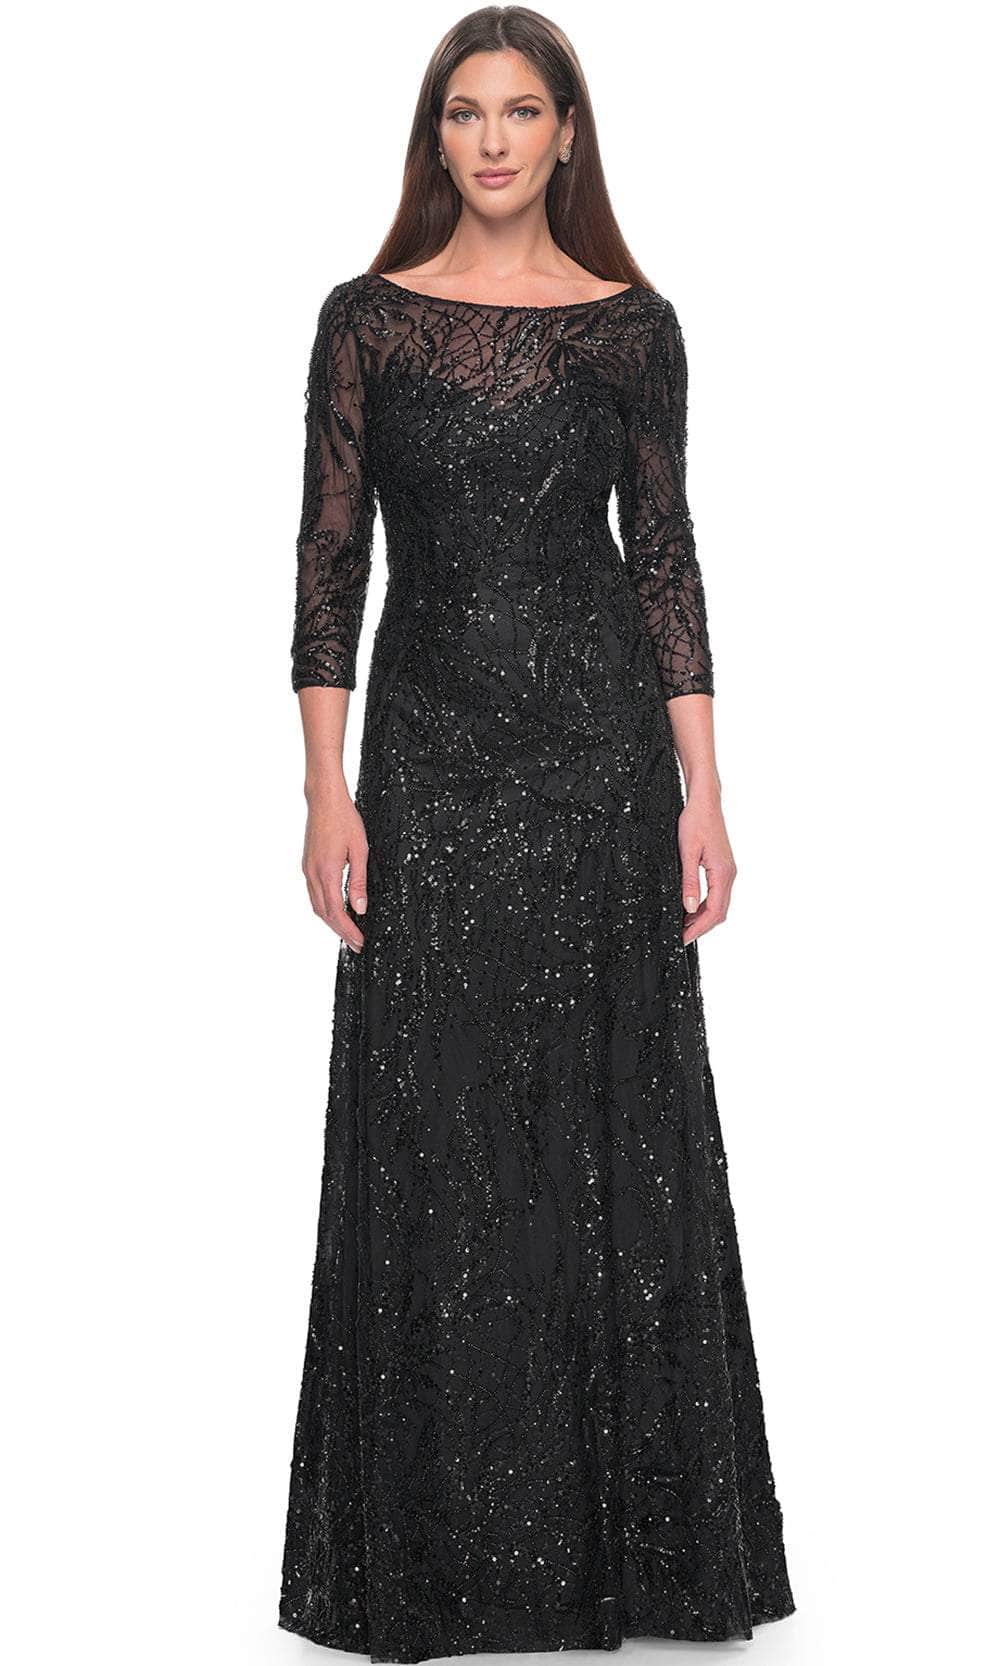 Image of La Femme 31690 - Illusion Sequin Formal Dress